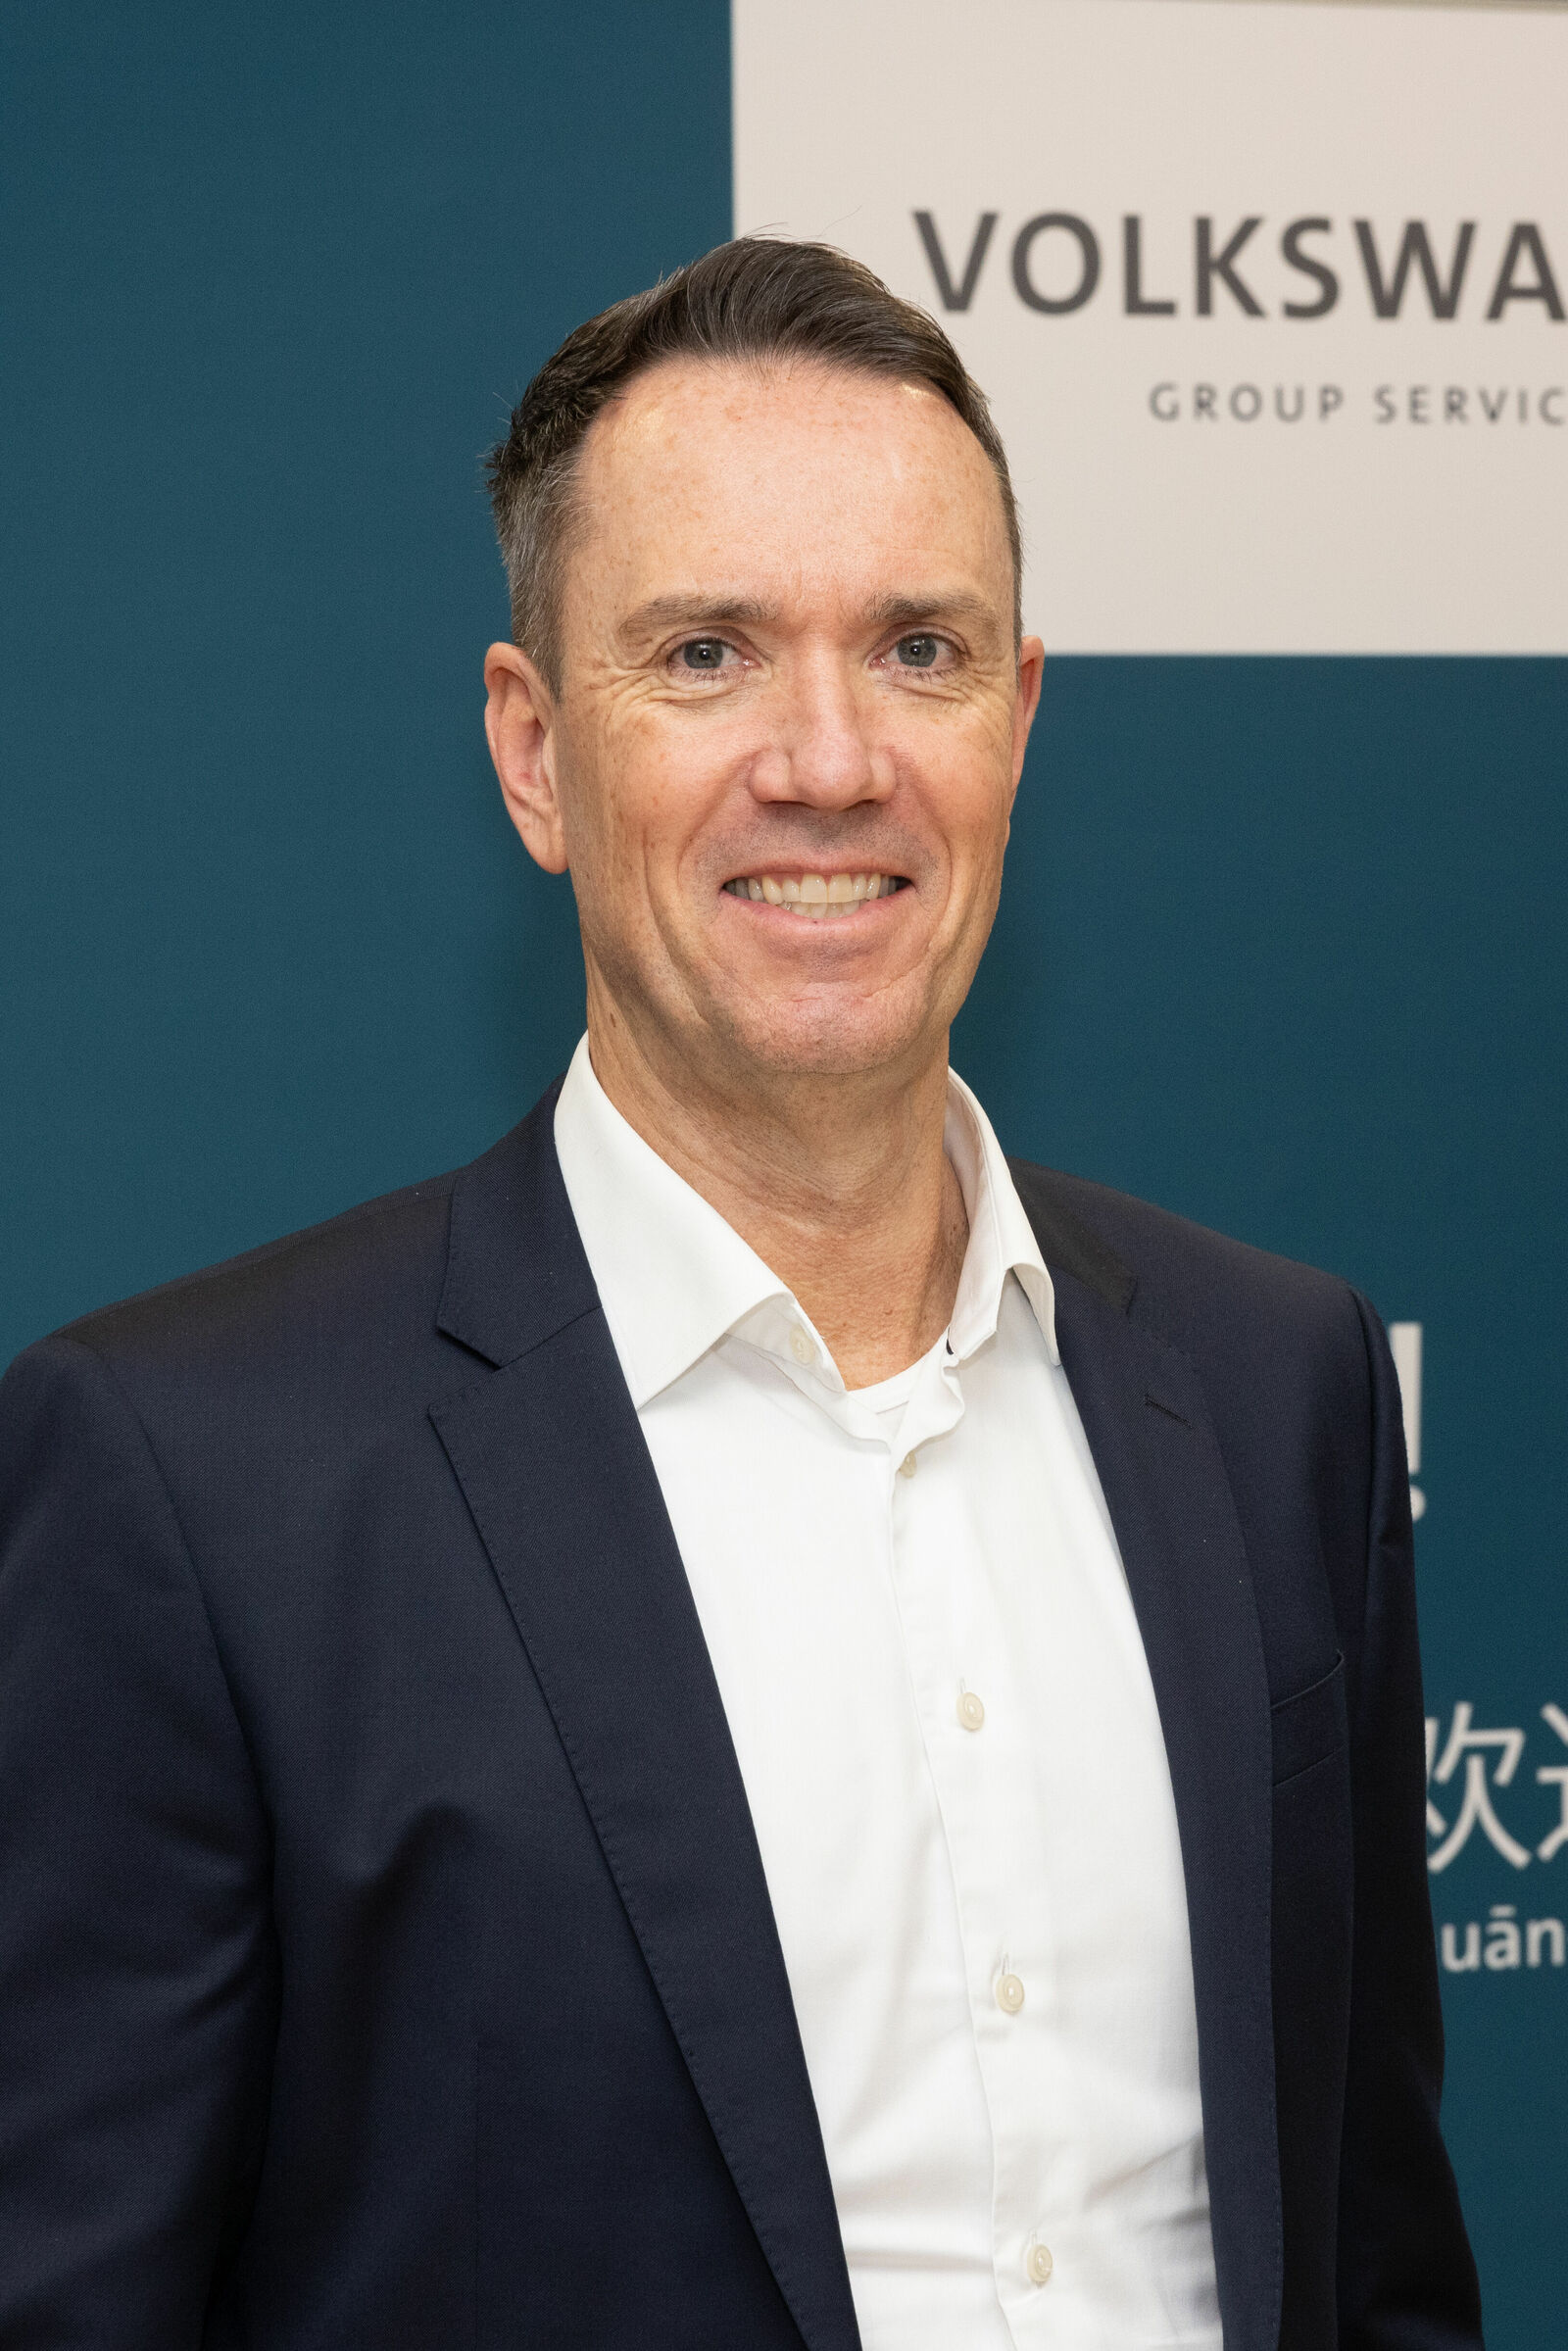 Thorsten Falk, Former member of management of Volkswagen Group Services GmbH